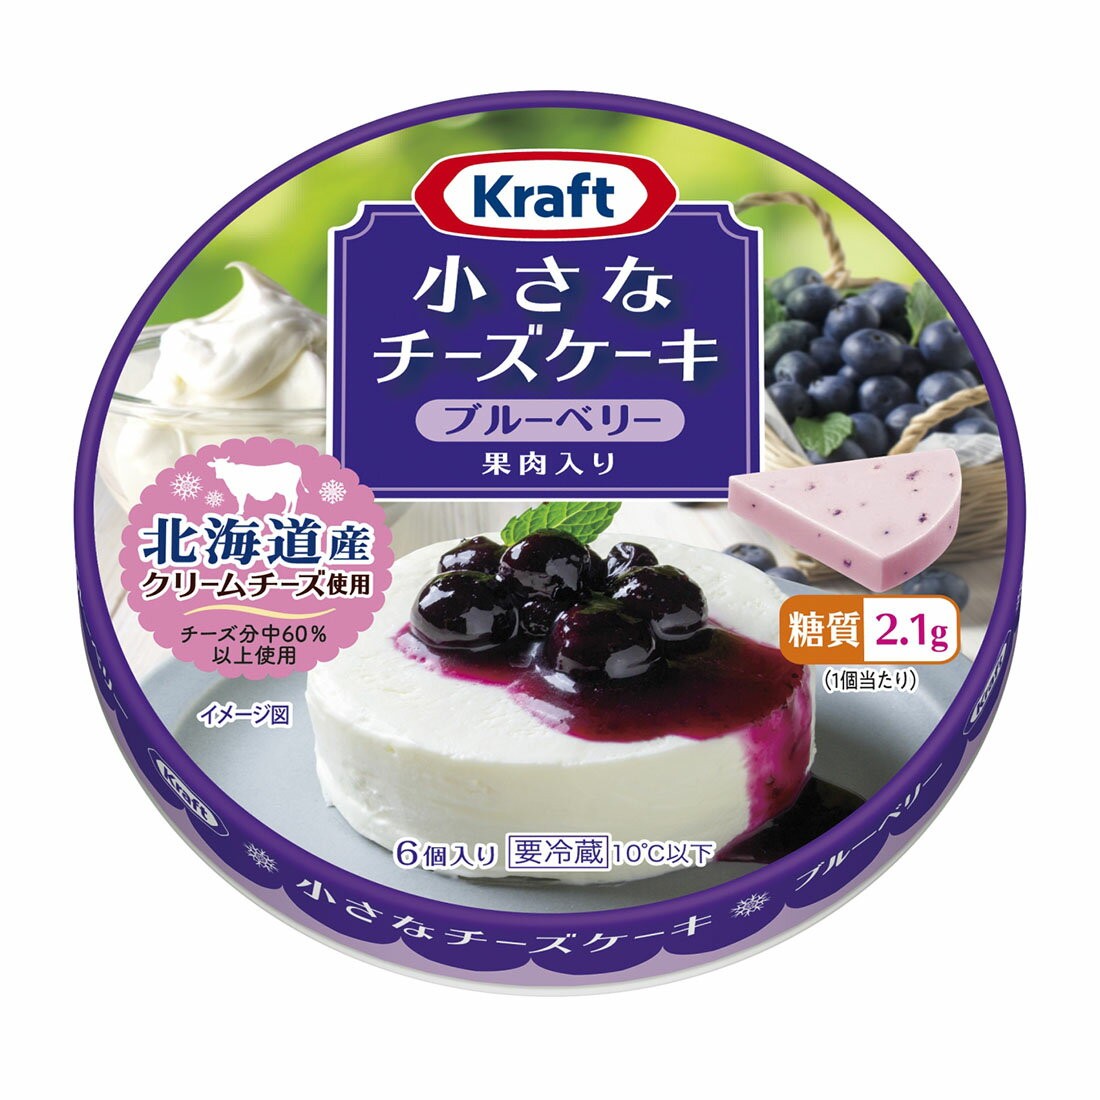 kraft-small-cheesecake-blueberry-flavor